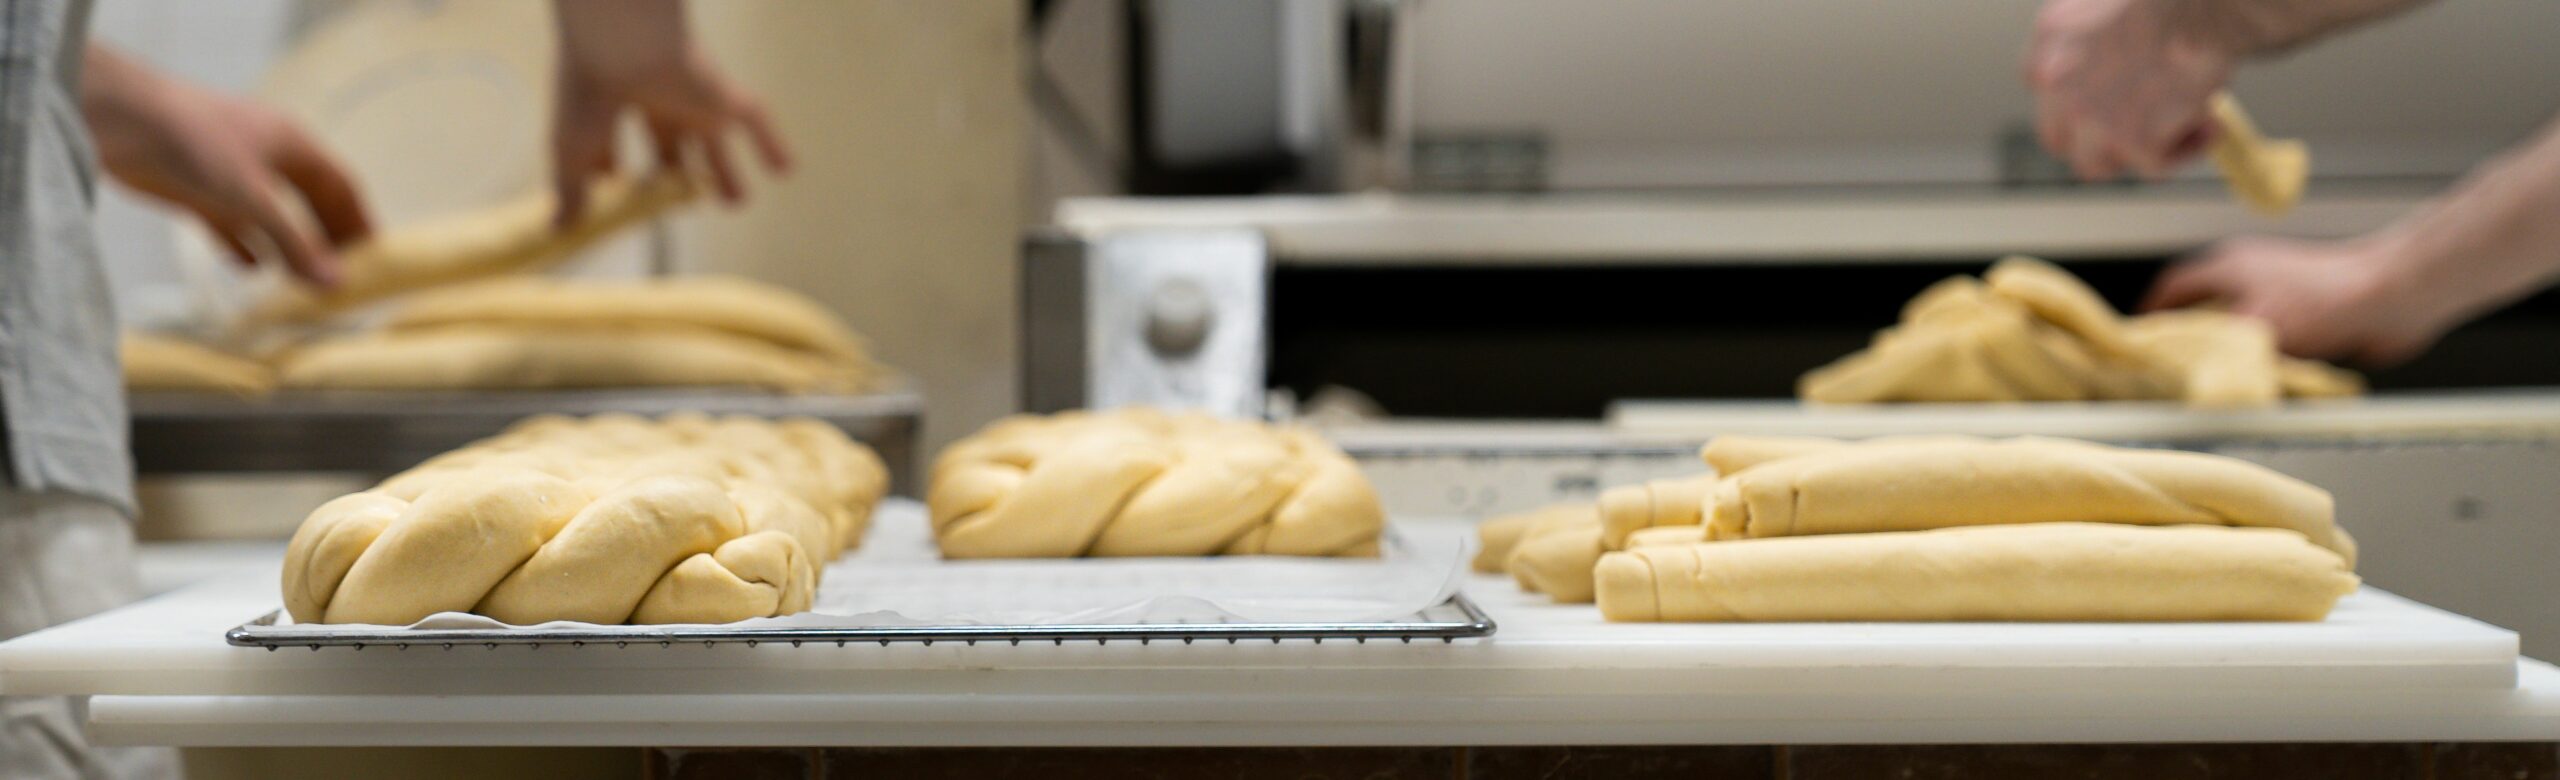 bakery-preparing-selling-tasty-breads-scaled